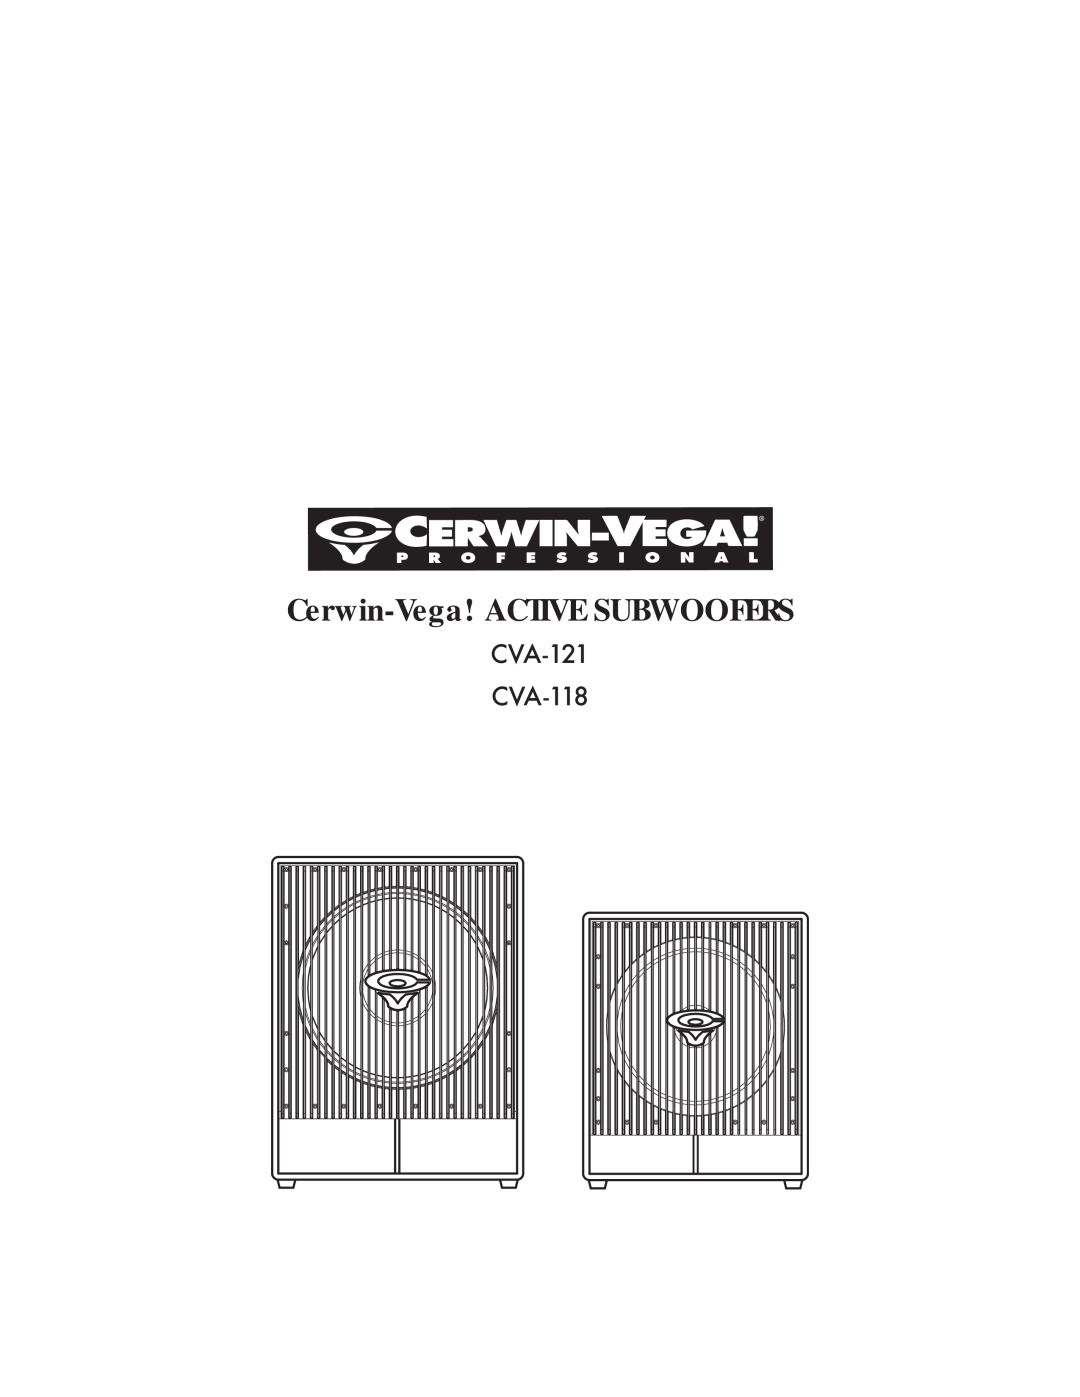 Cerwin-Vega manual Cerwin-Vega!ACTIVE SUBWOOFERS, CVA-121 CVA-118 